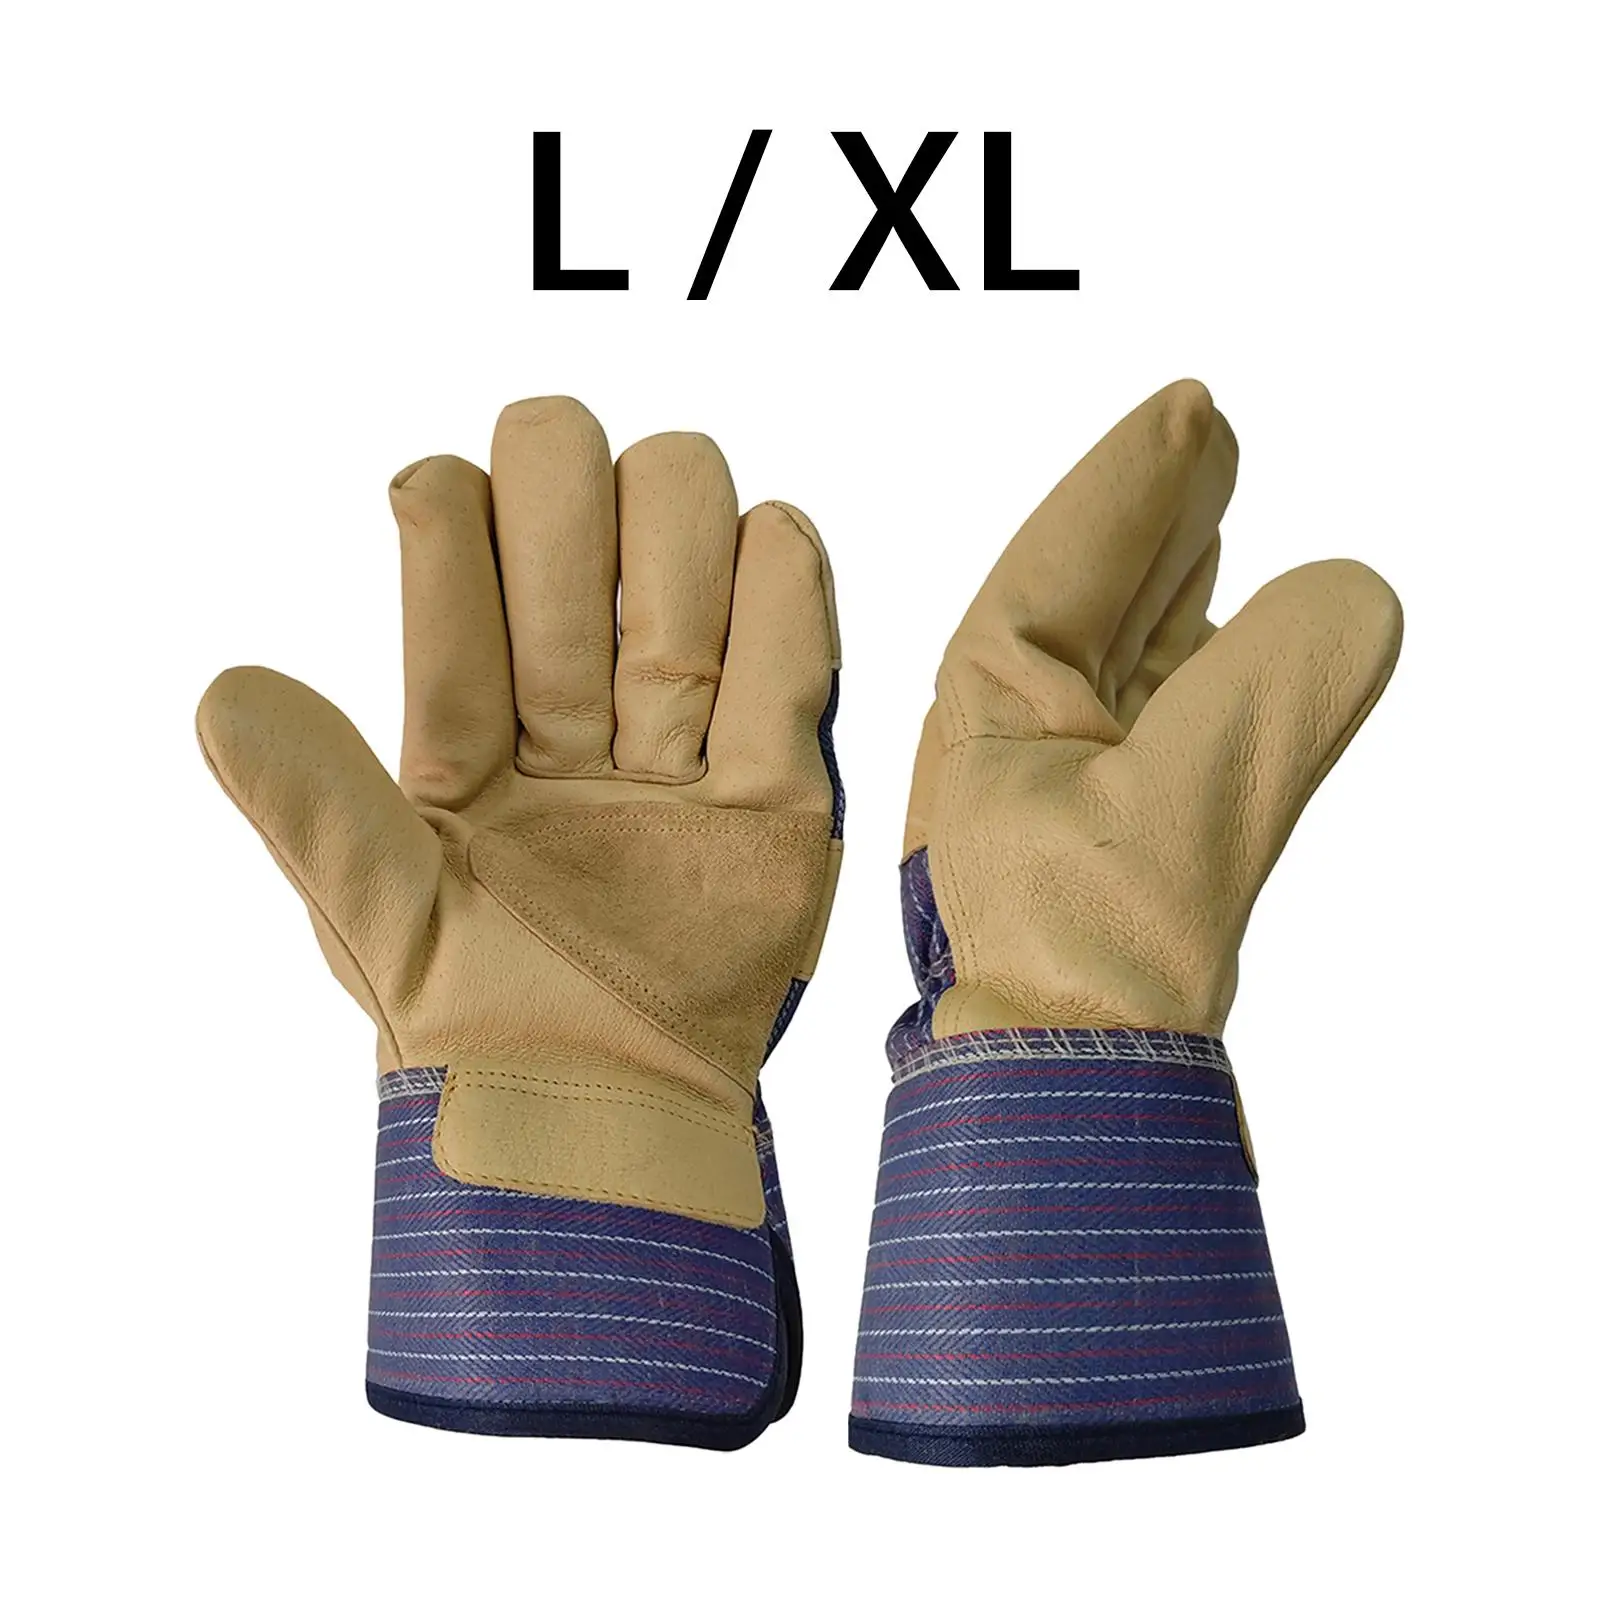 Welding Gloves Anti Slip Soft Flexible Durable Heavy Duty Heat Insulation Protective Gear for BBQ Pot Holder Furnace Warehouse